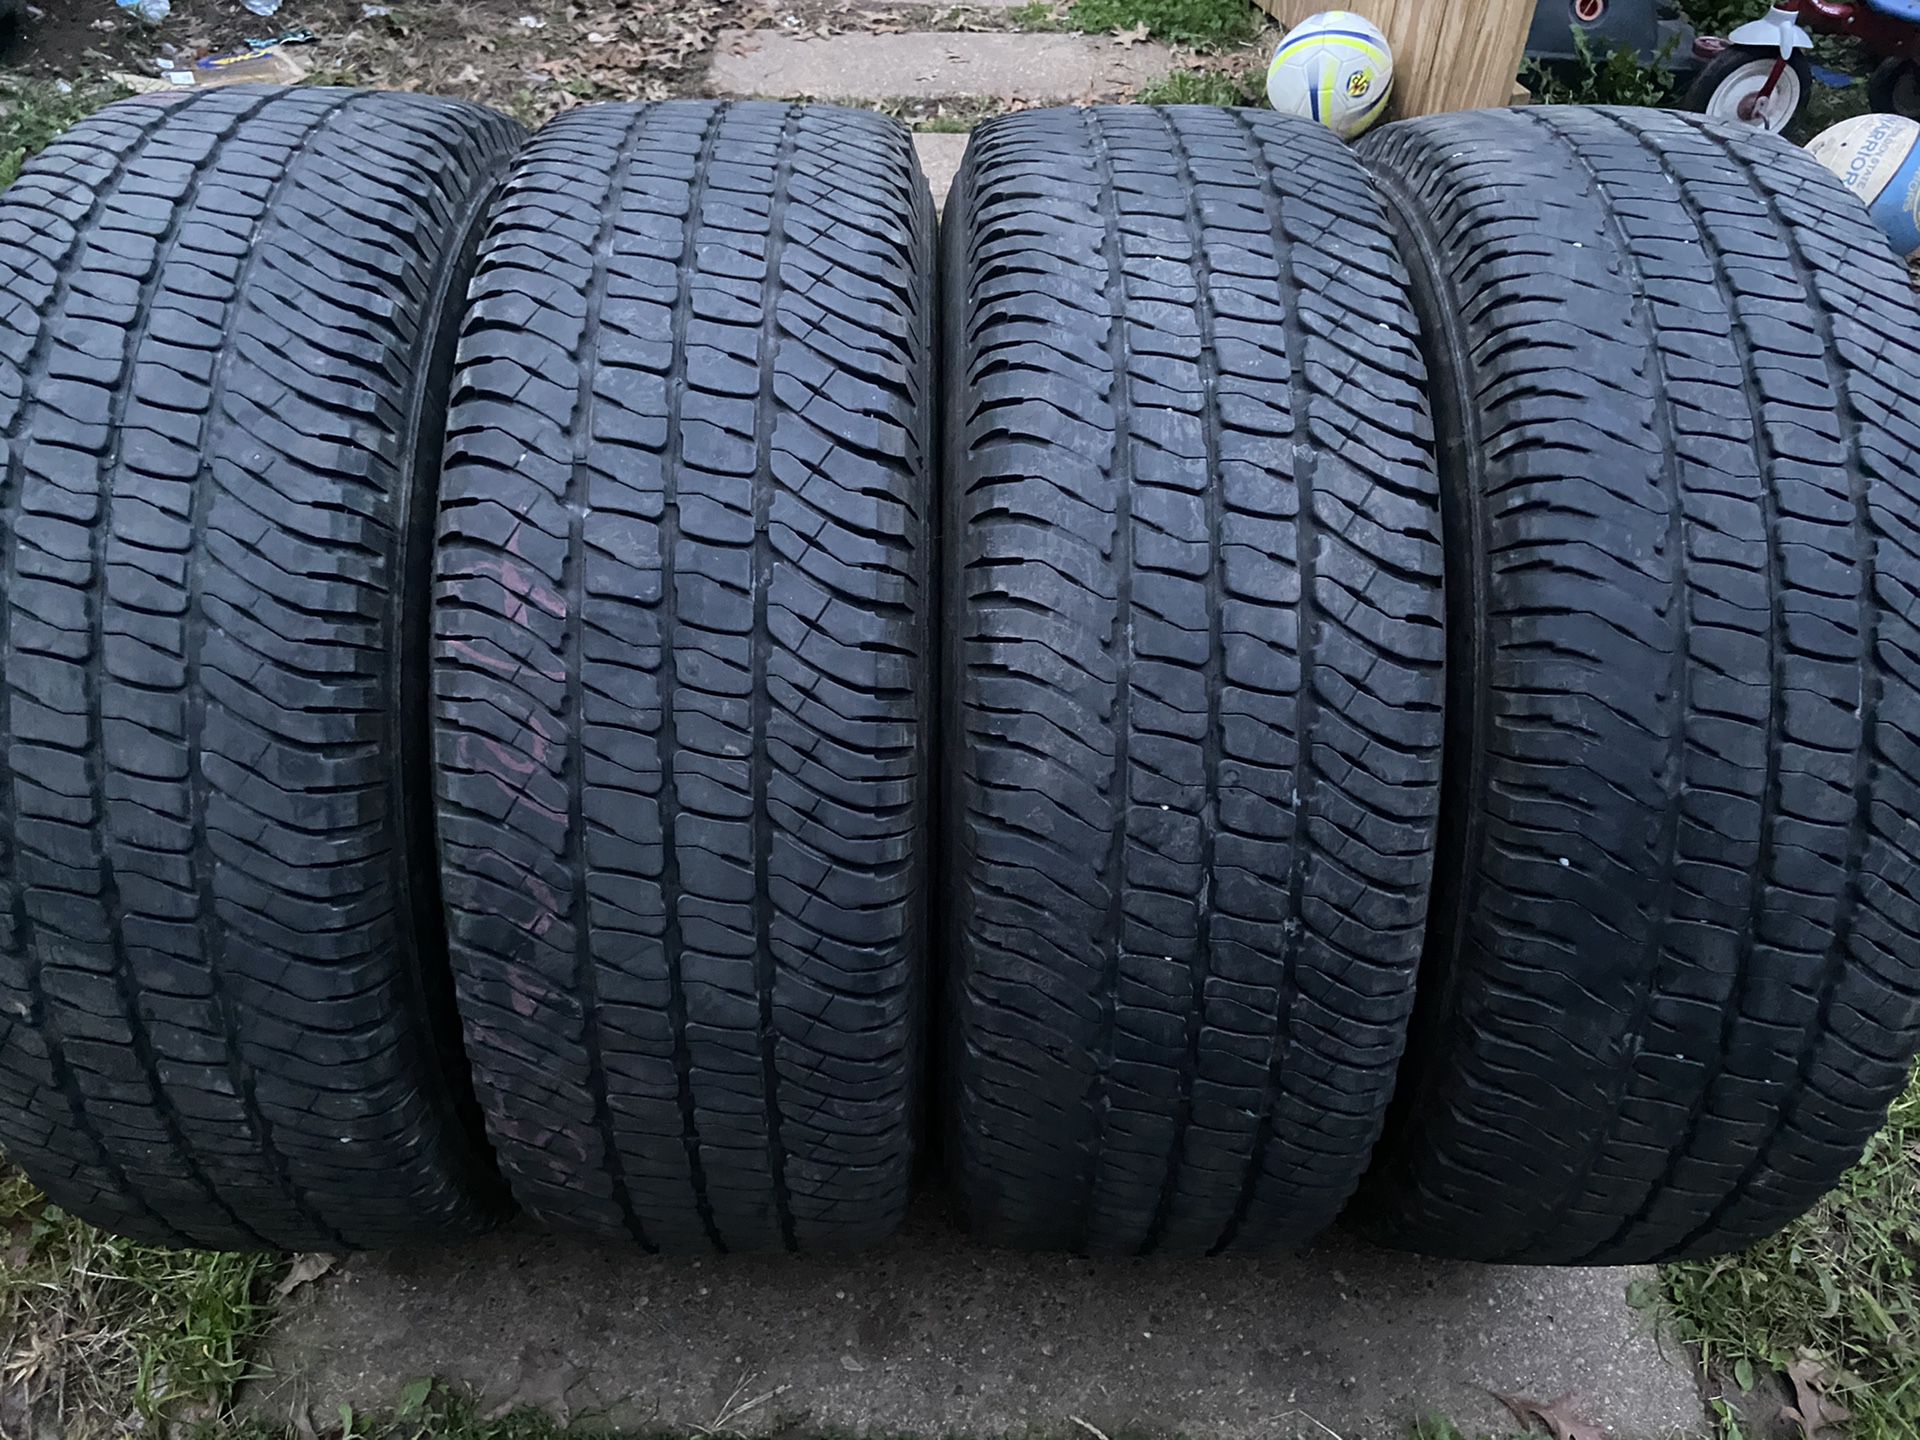 4 good use tires Michelin LT 265/70/17